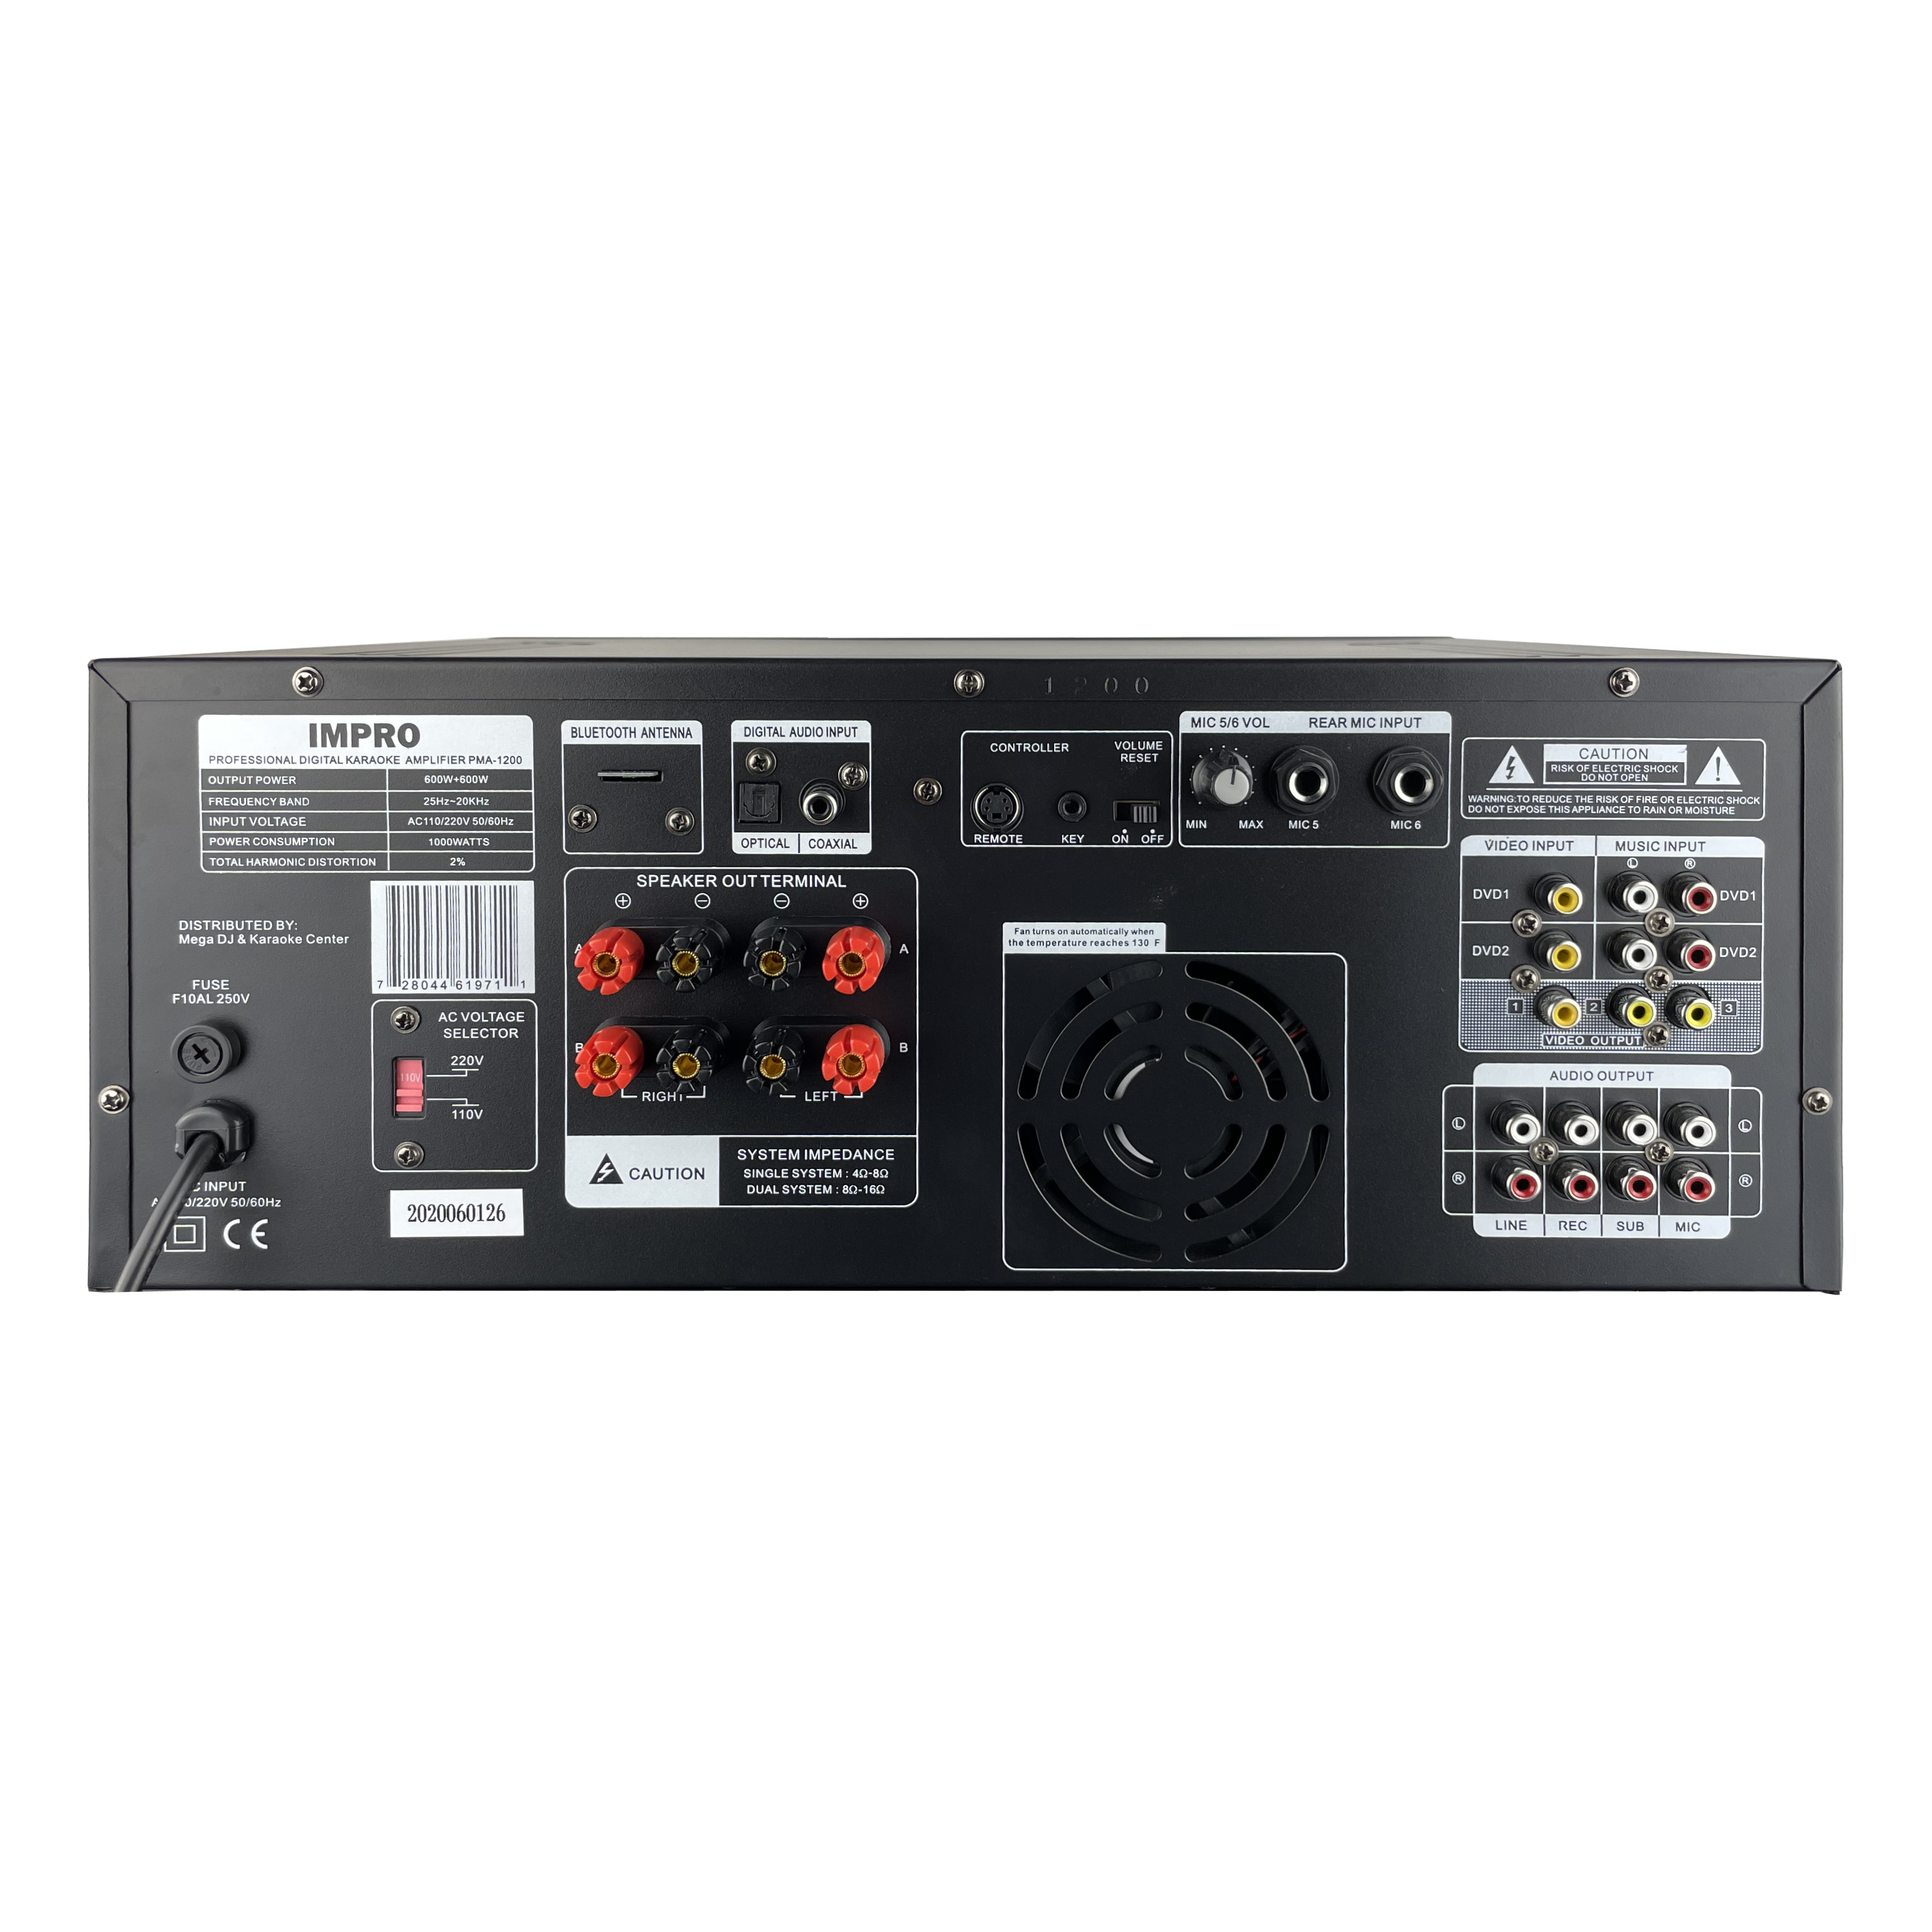 ImPro PMA-1200 1200W Mixing Amplifier Bundle with ImPro UHF-88MXR Wireless Microphones